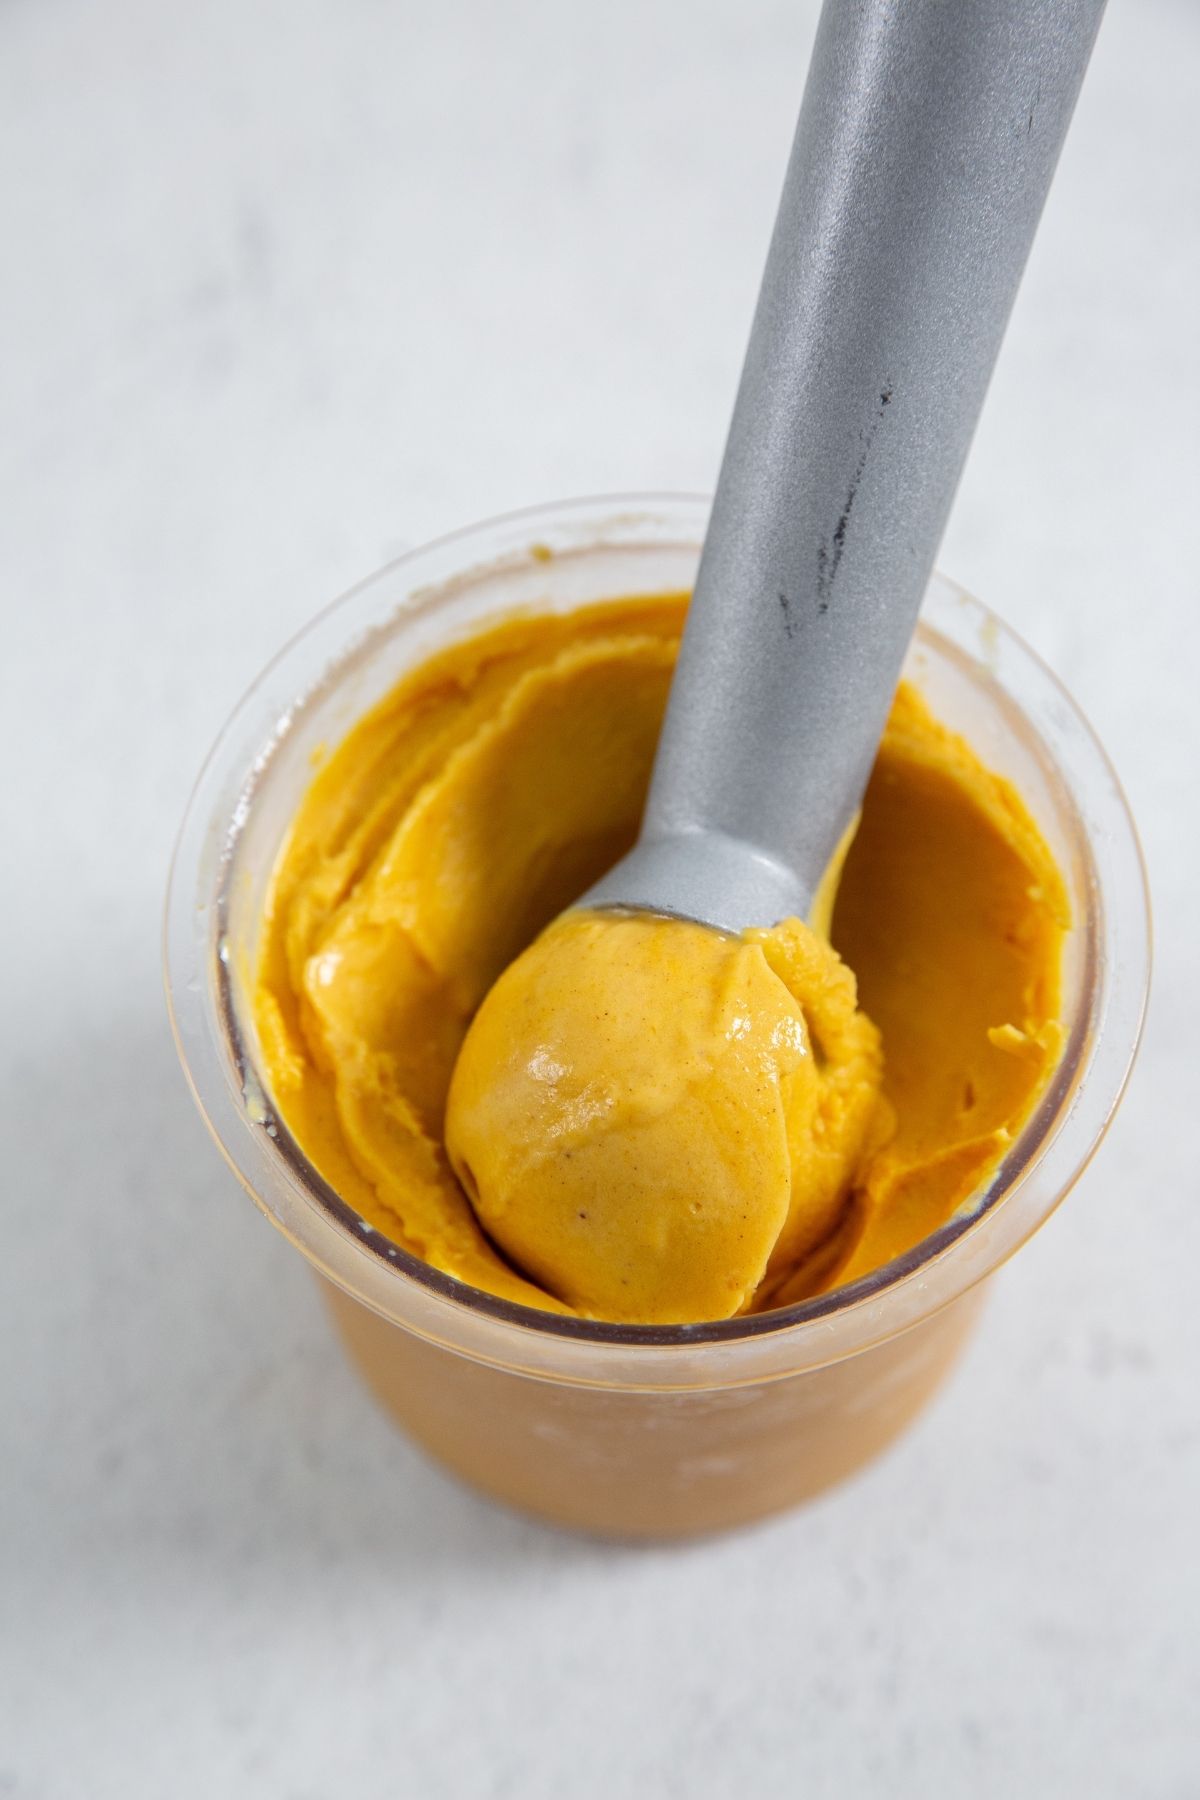 Ninja Creami Pumpkin Ice Cream in the ninja creami container with an ice cream spoon and white napkin